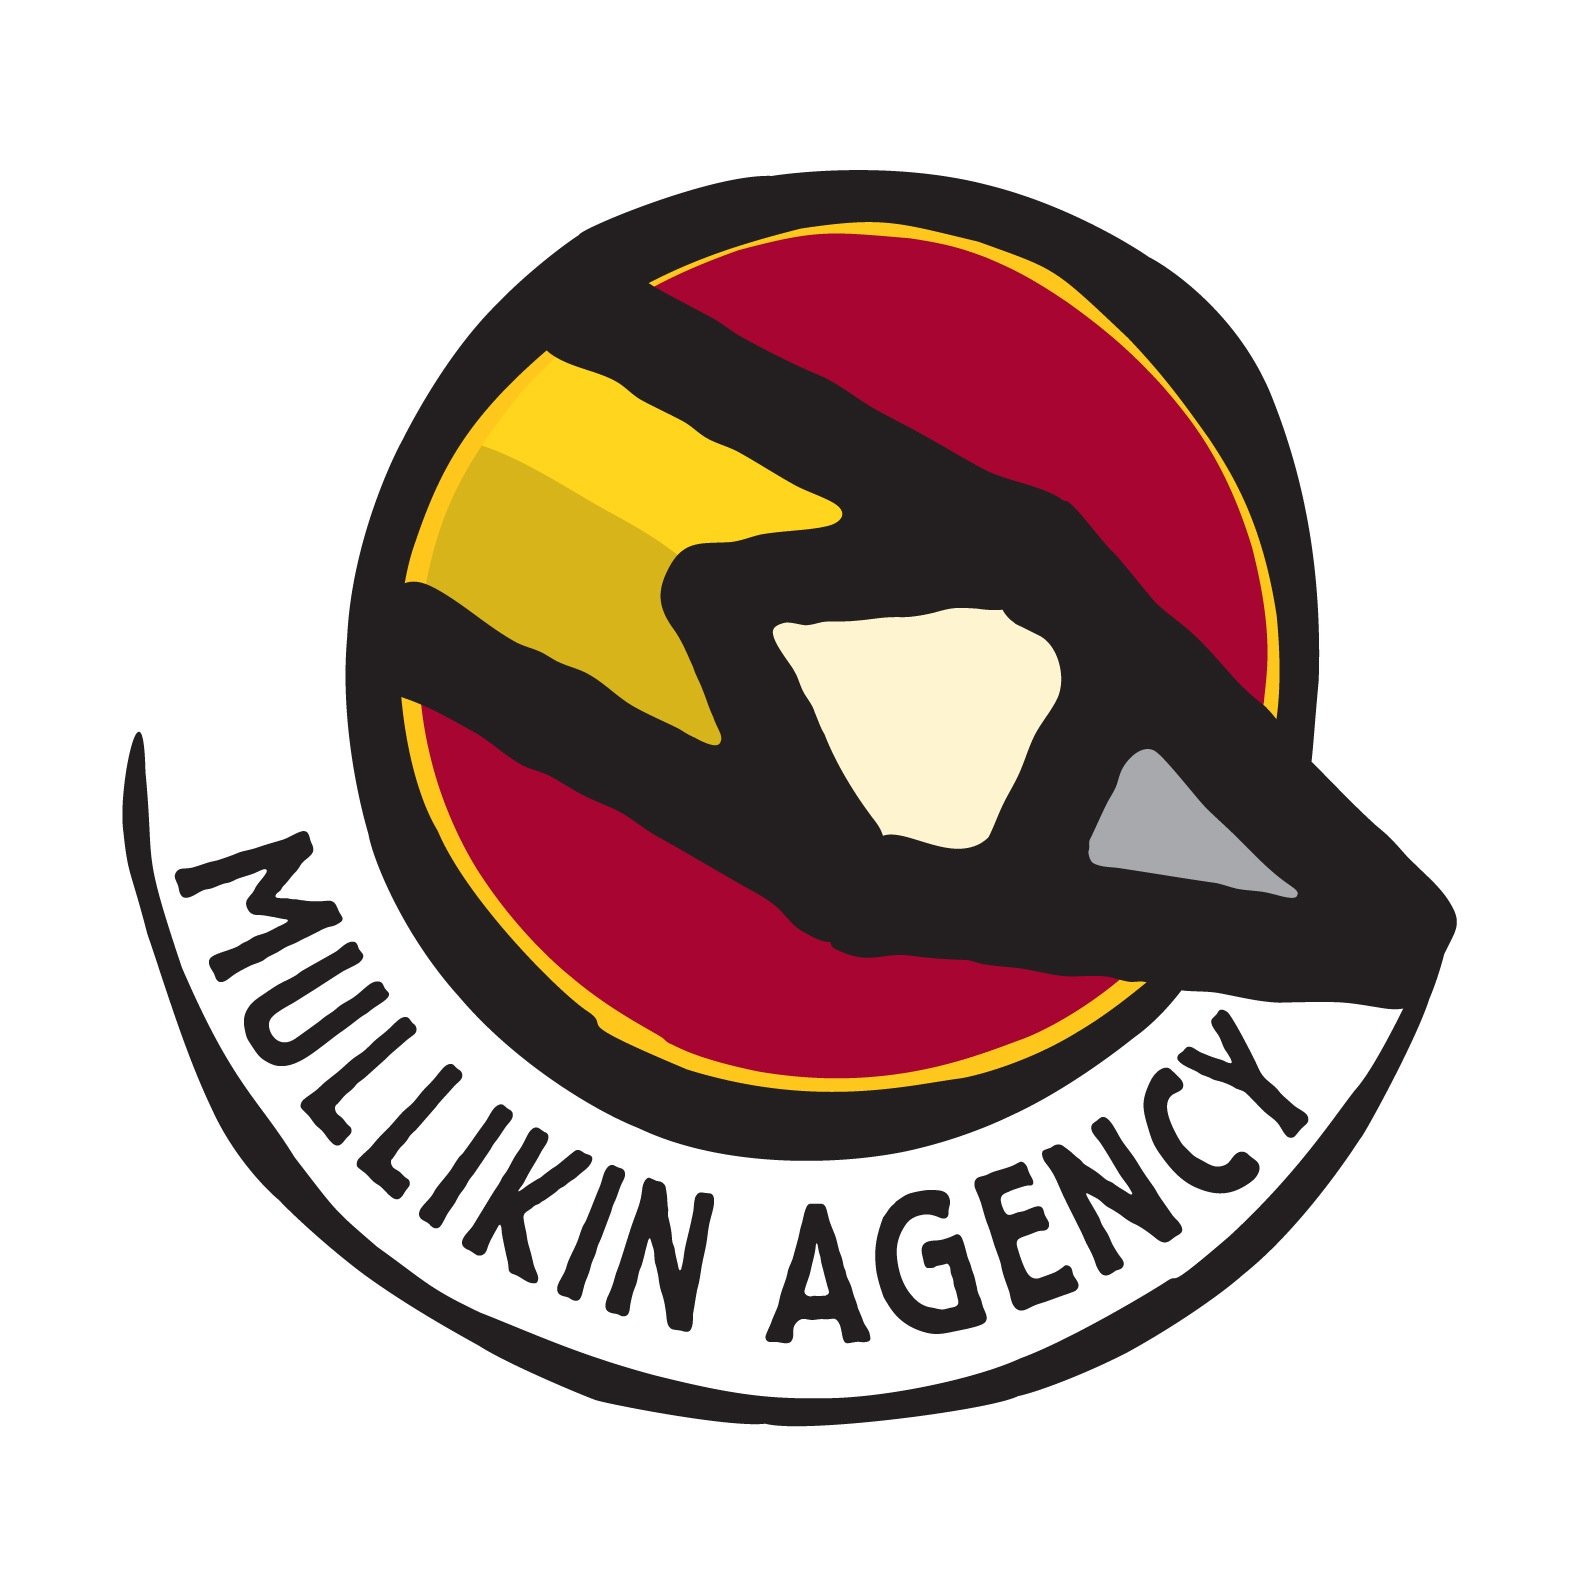 The Mullikin Agency is a full-service advertising, marketing & public relations company. [We Follow Back!]
Hashtag us: #mullikinad